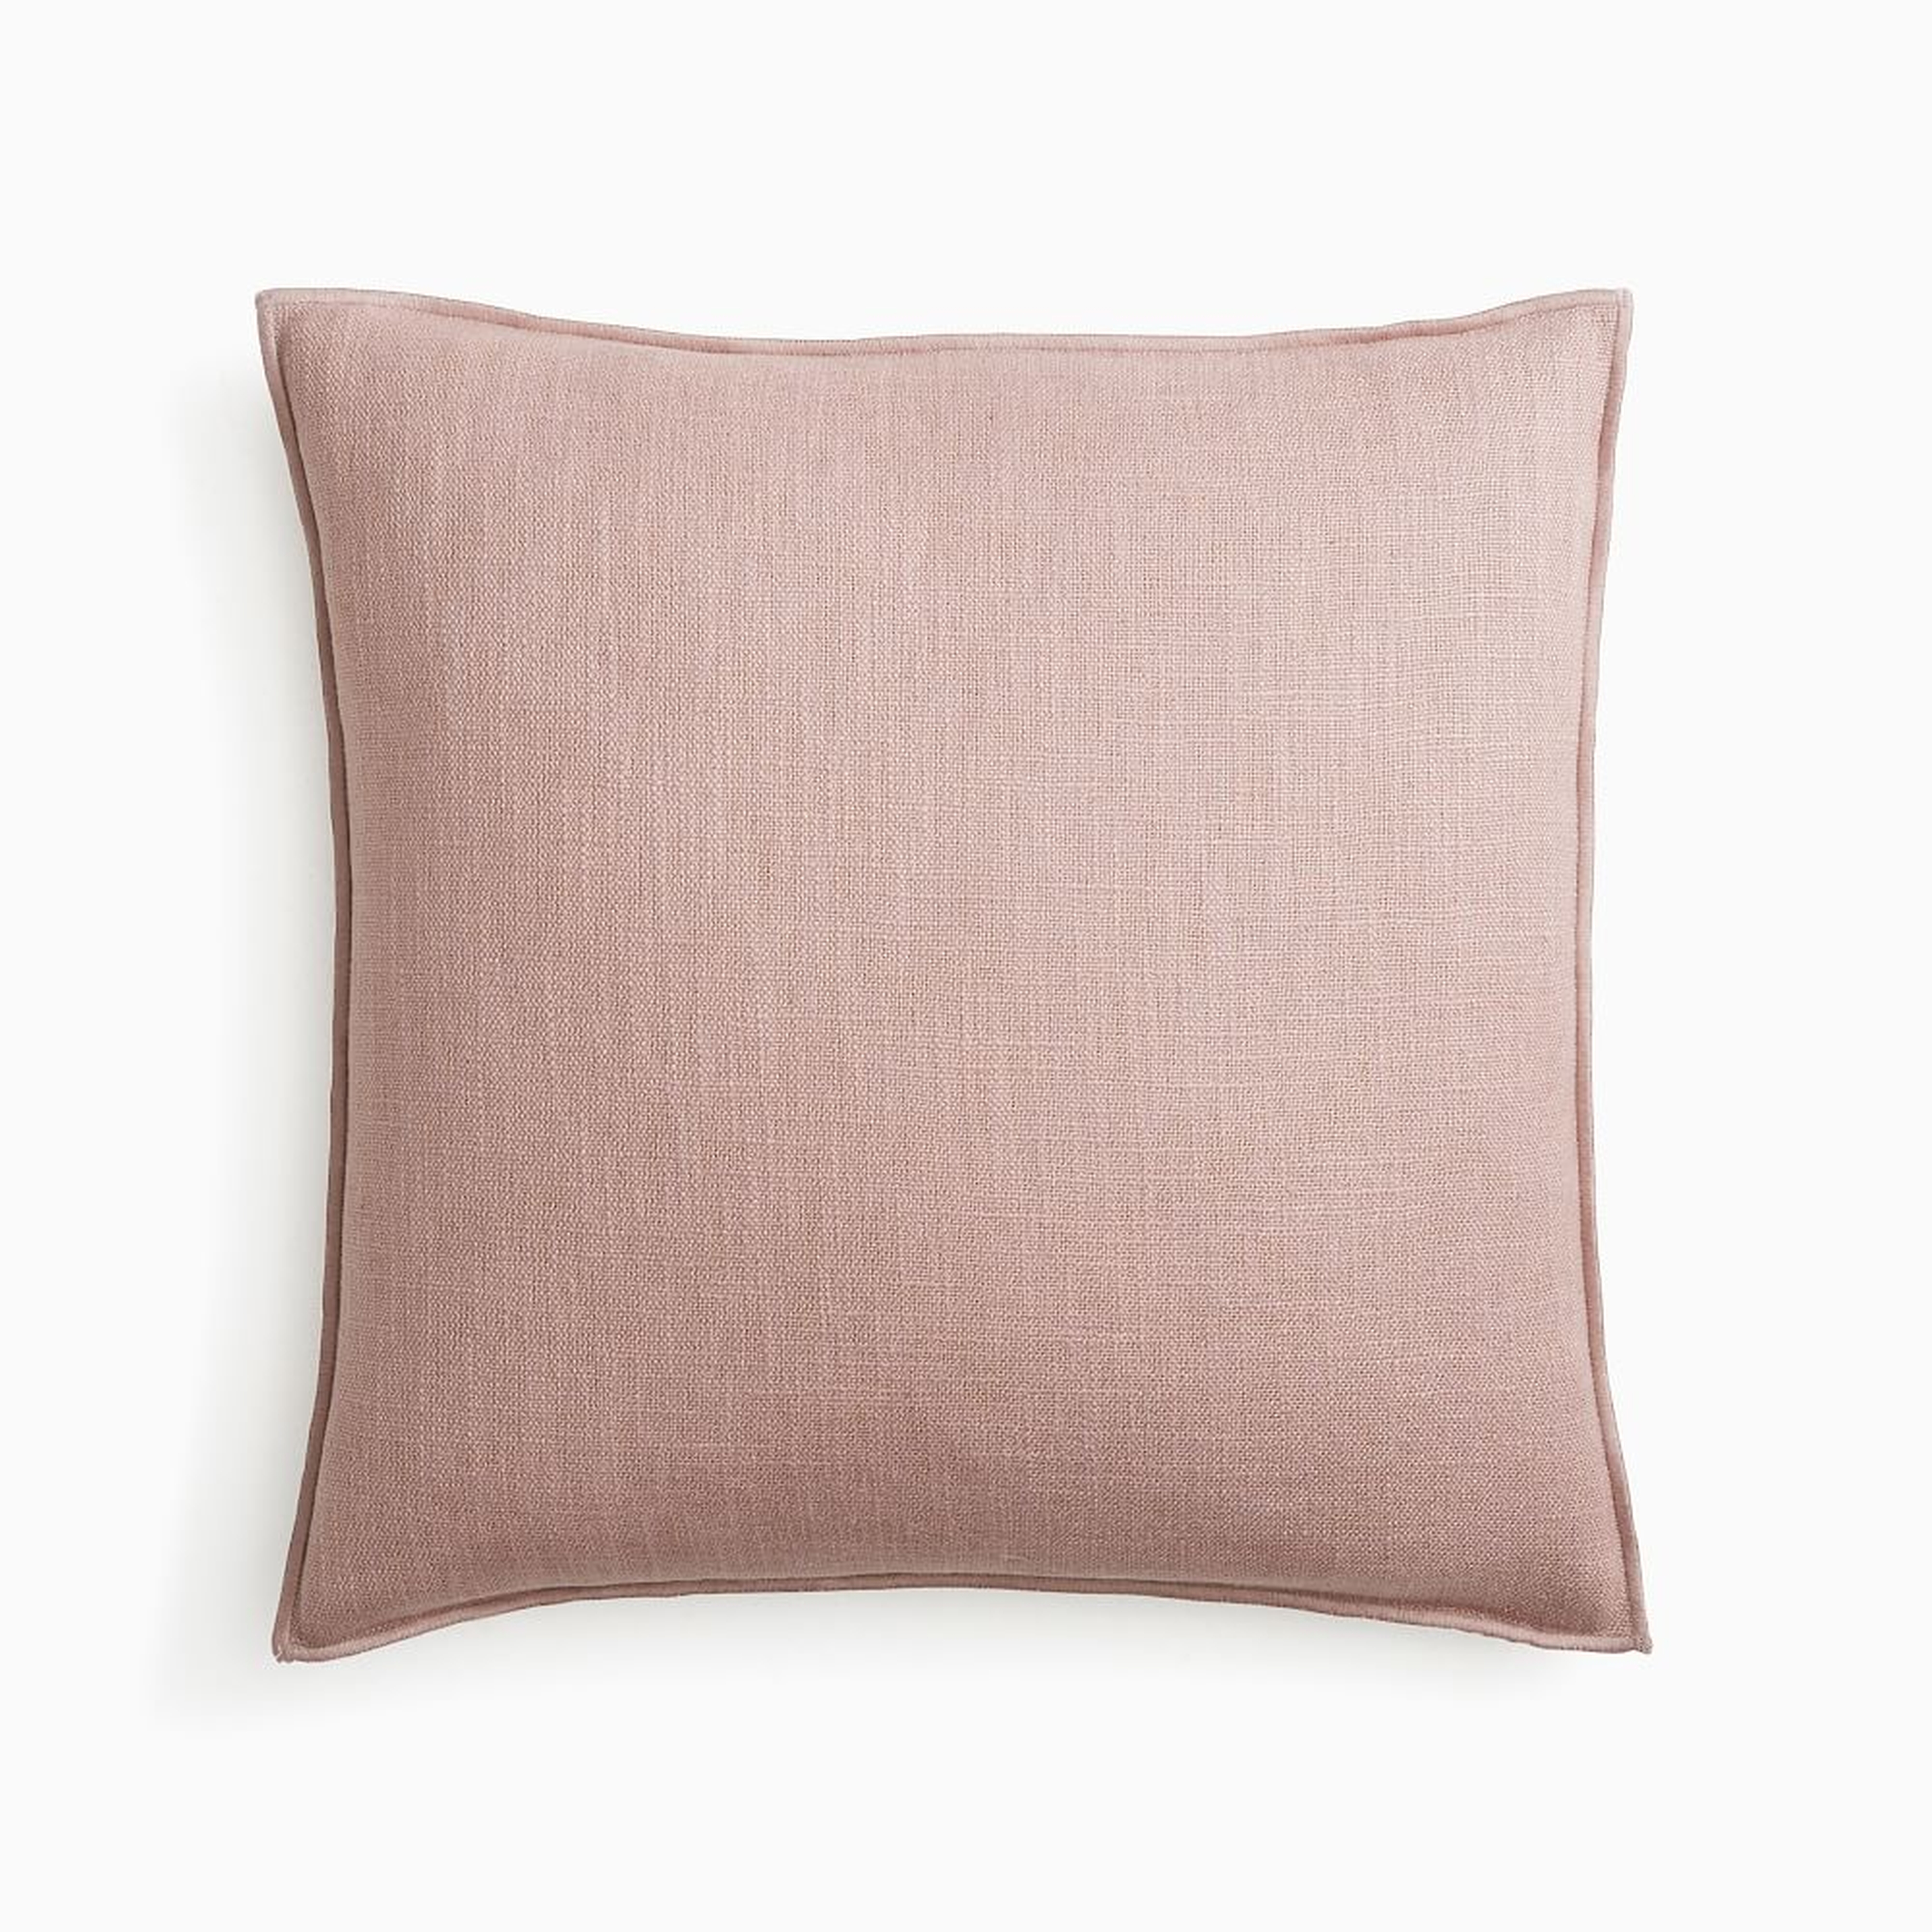 Classic Linen Pillow Cover, 20"x20", Adobe Rose, Set of 2 - West Elm